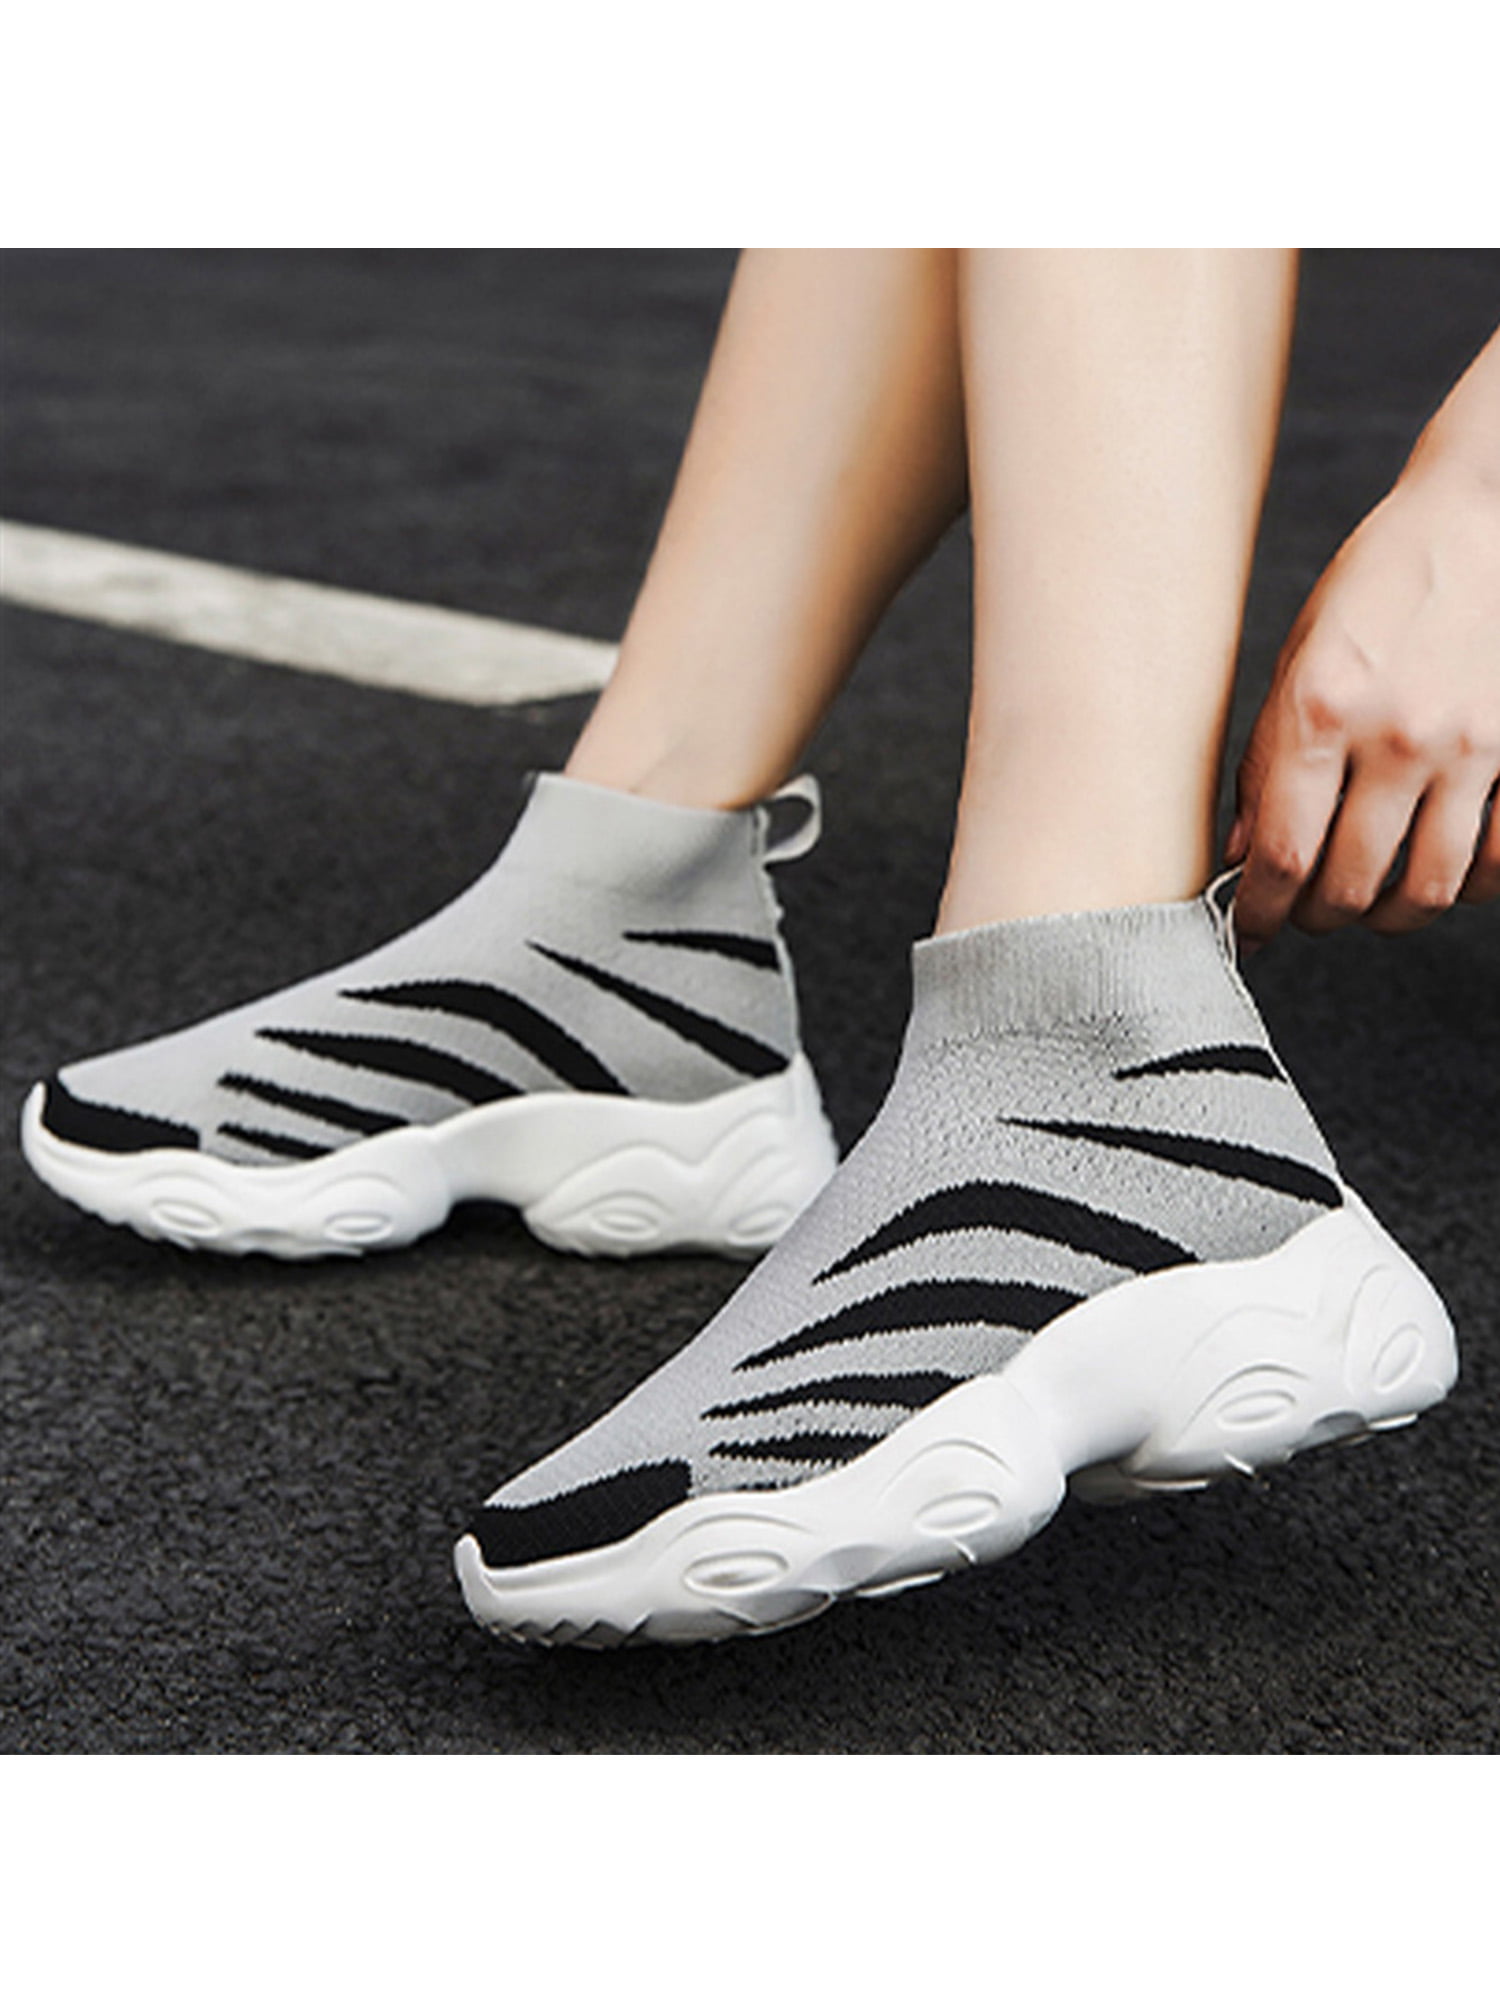 Footful Women Sports Shoe Insoles Bamboo Charcoal Deodorant US Size 4-10 Black 